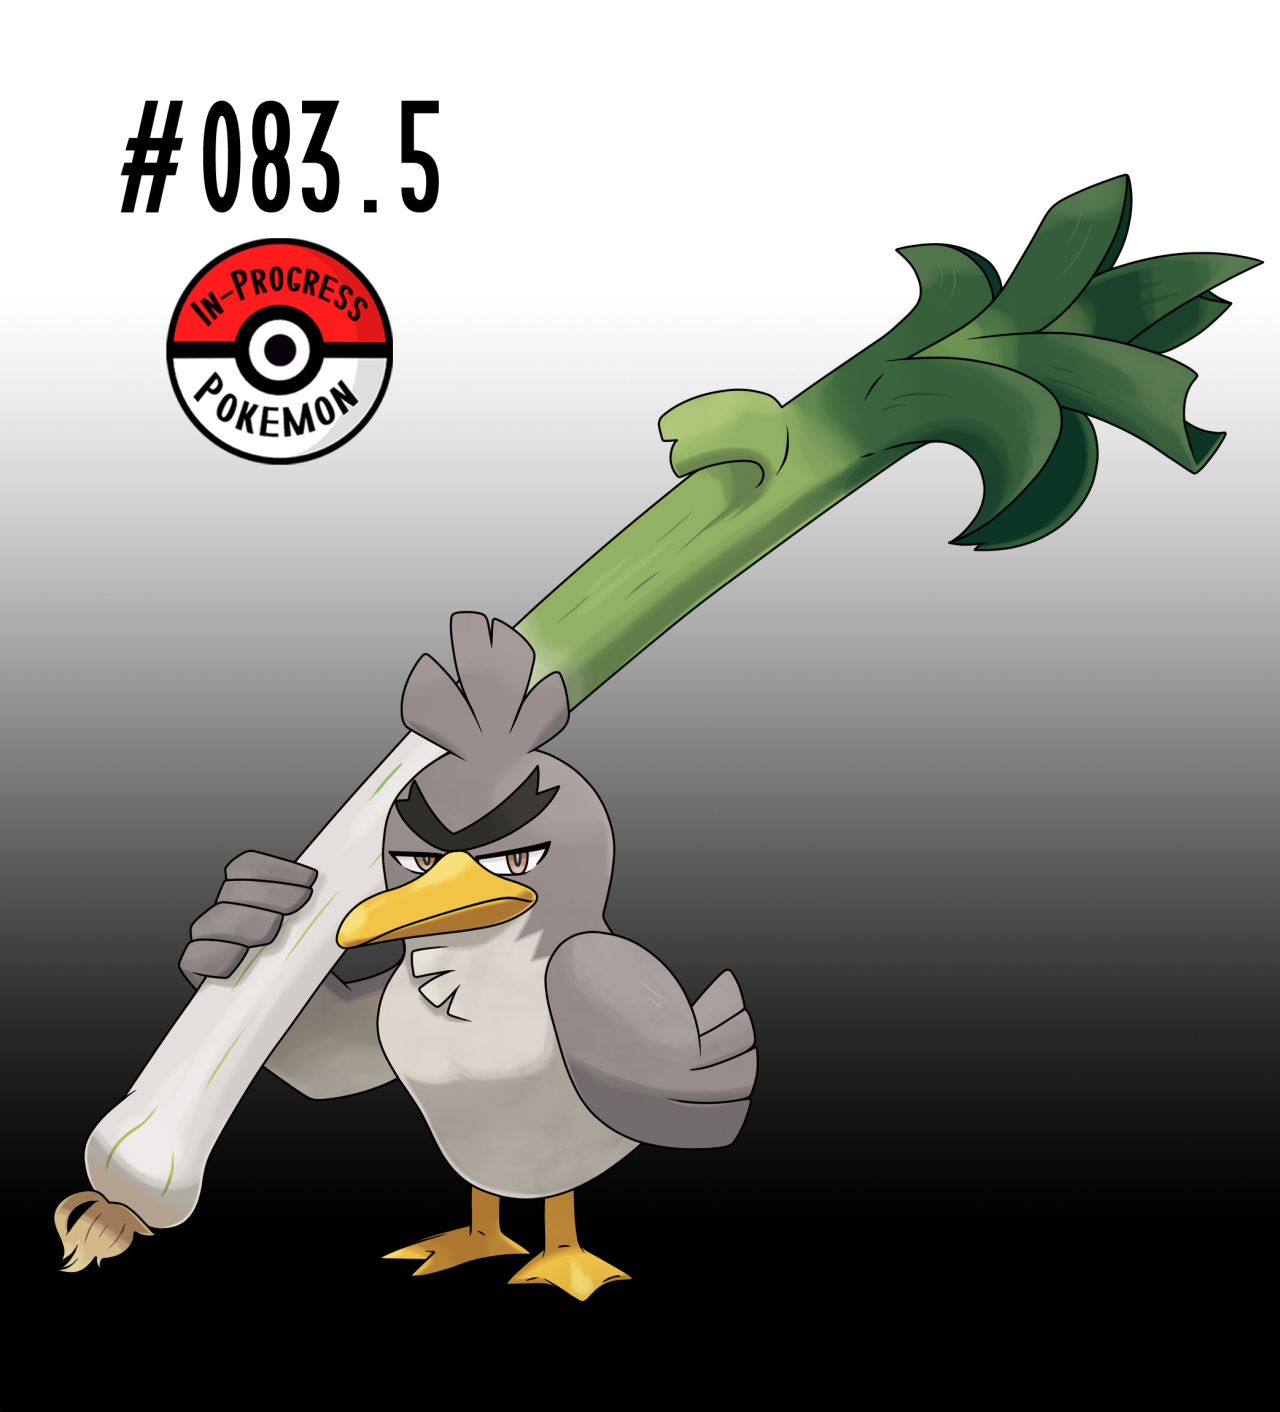 It's here! Pokémon - LeekGreen! Use Farfetch'd and his evolution